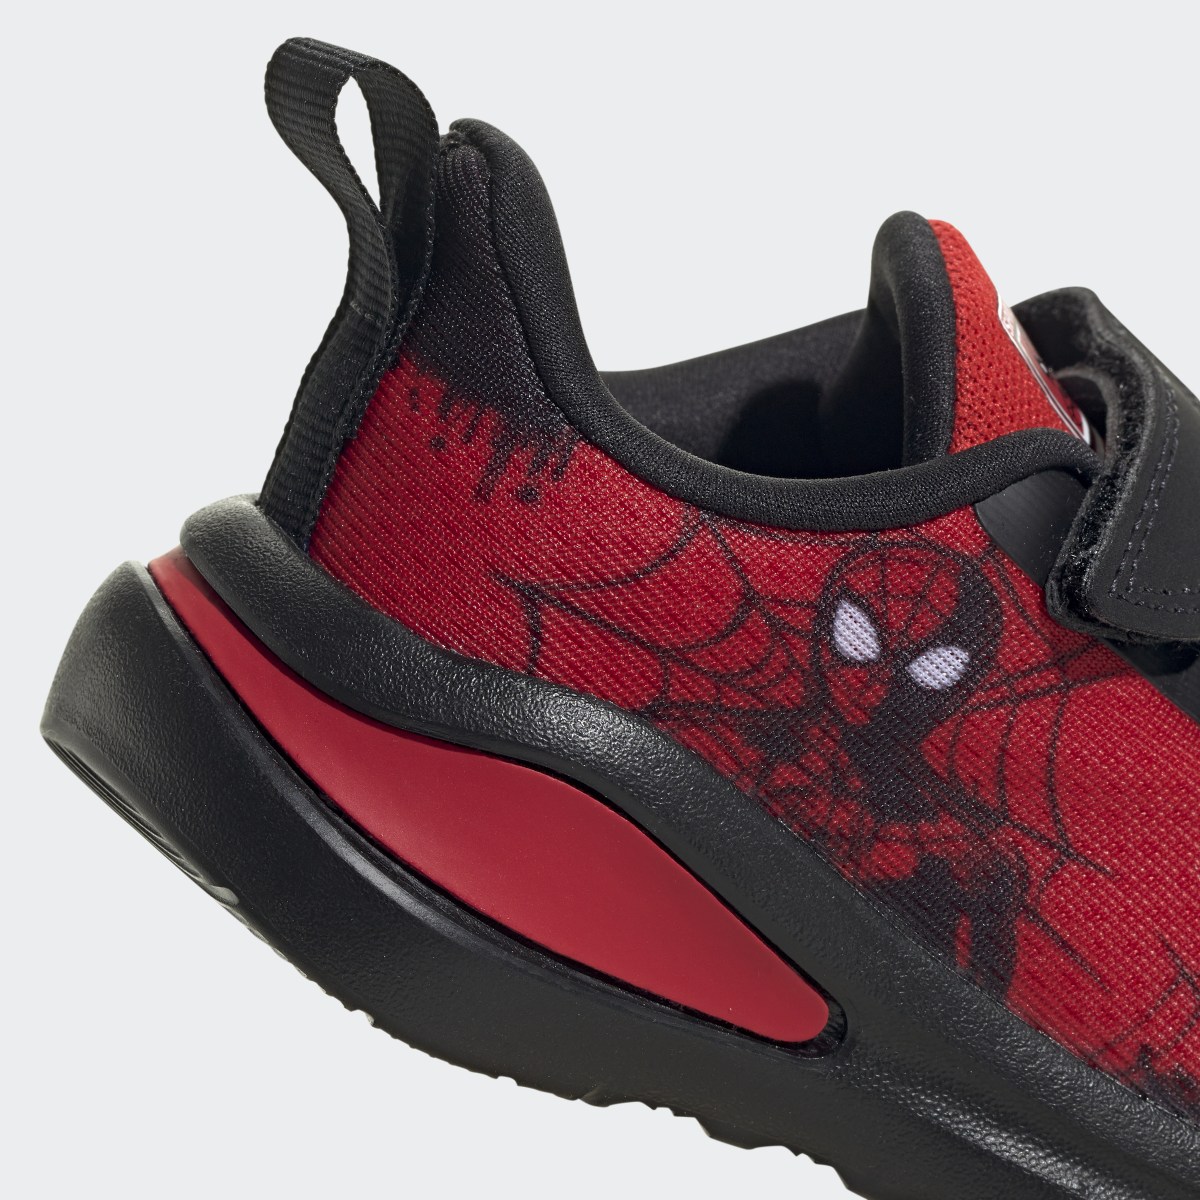 Adidas x Marvel Spider-Man Fortarun Shoes. 10